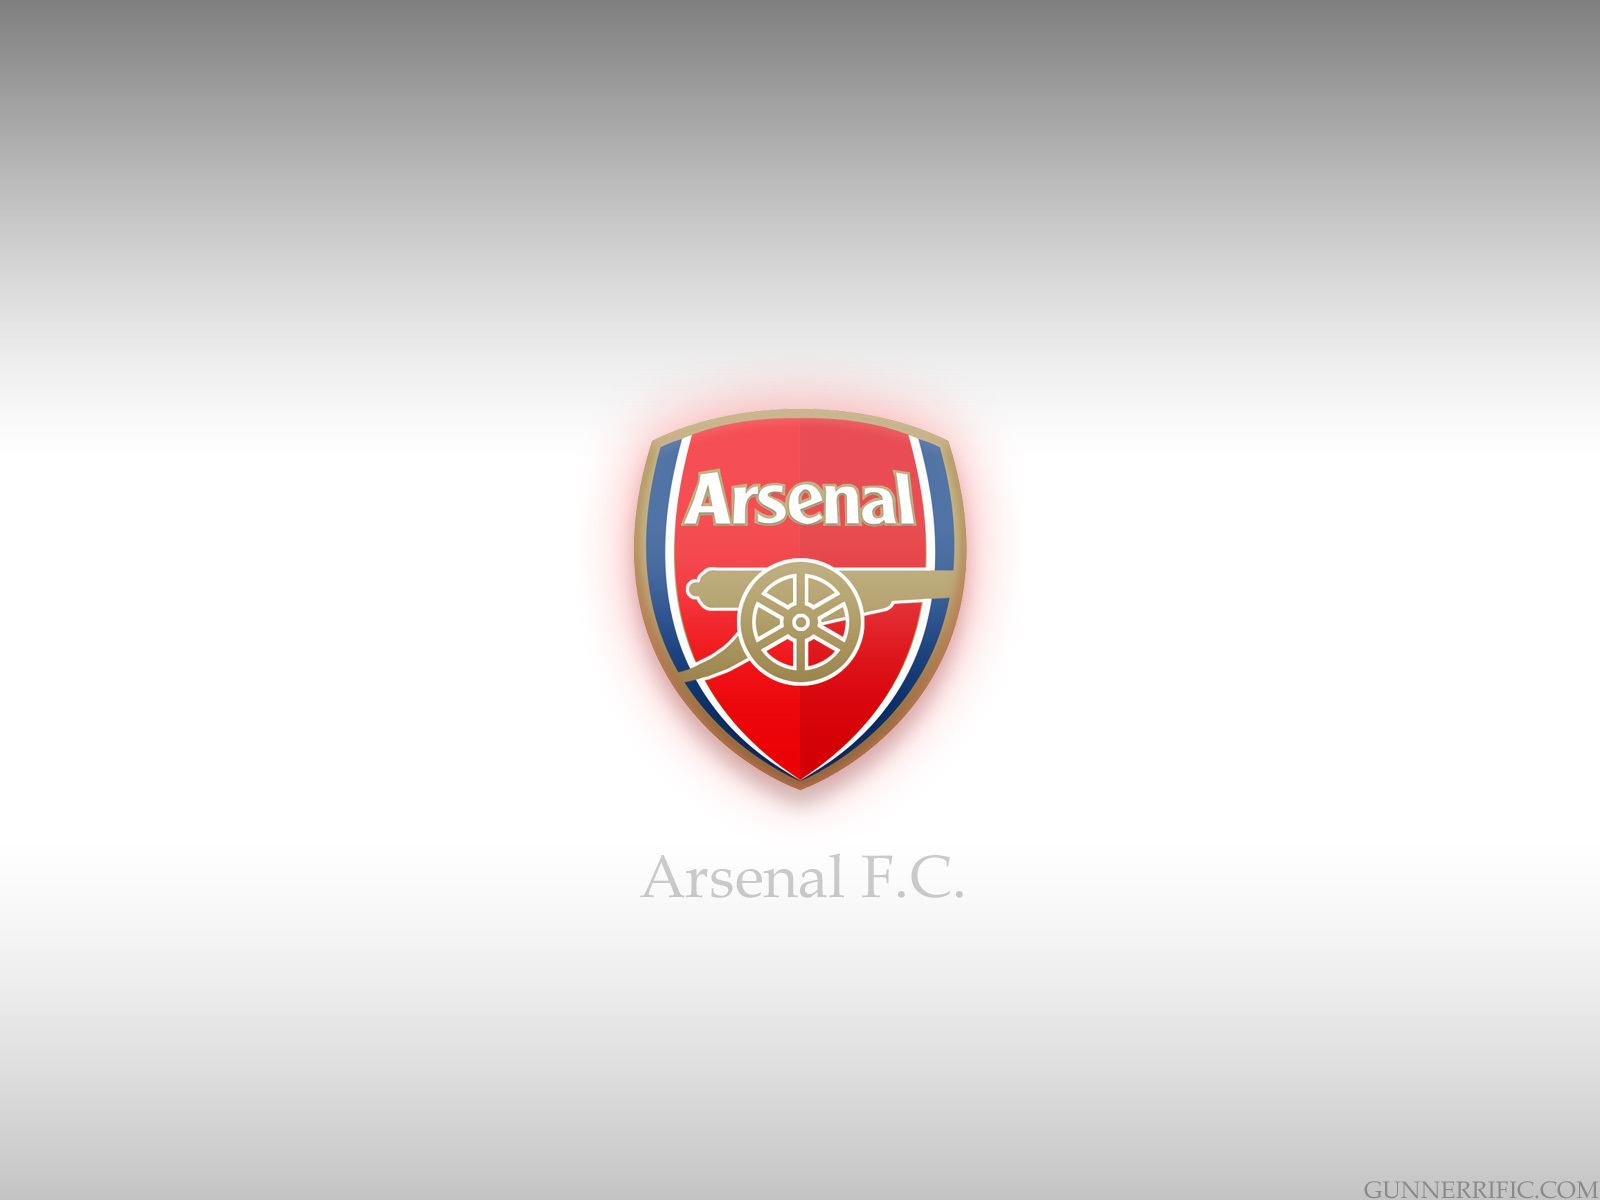 Beloved Arsenal